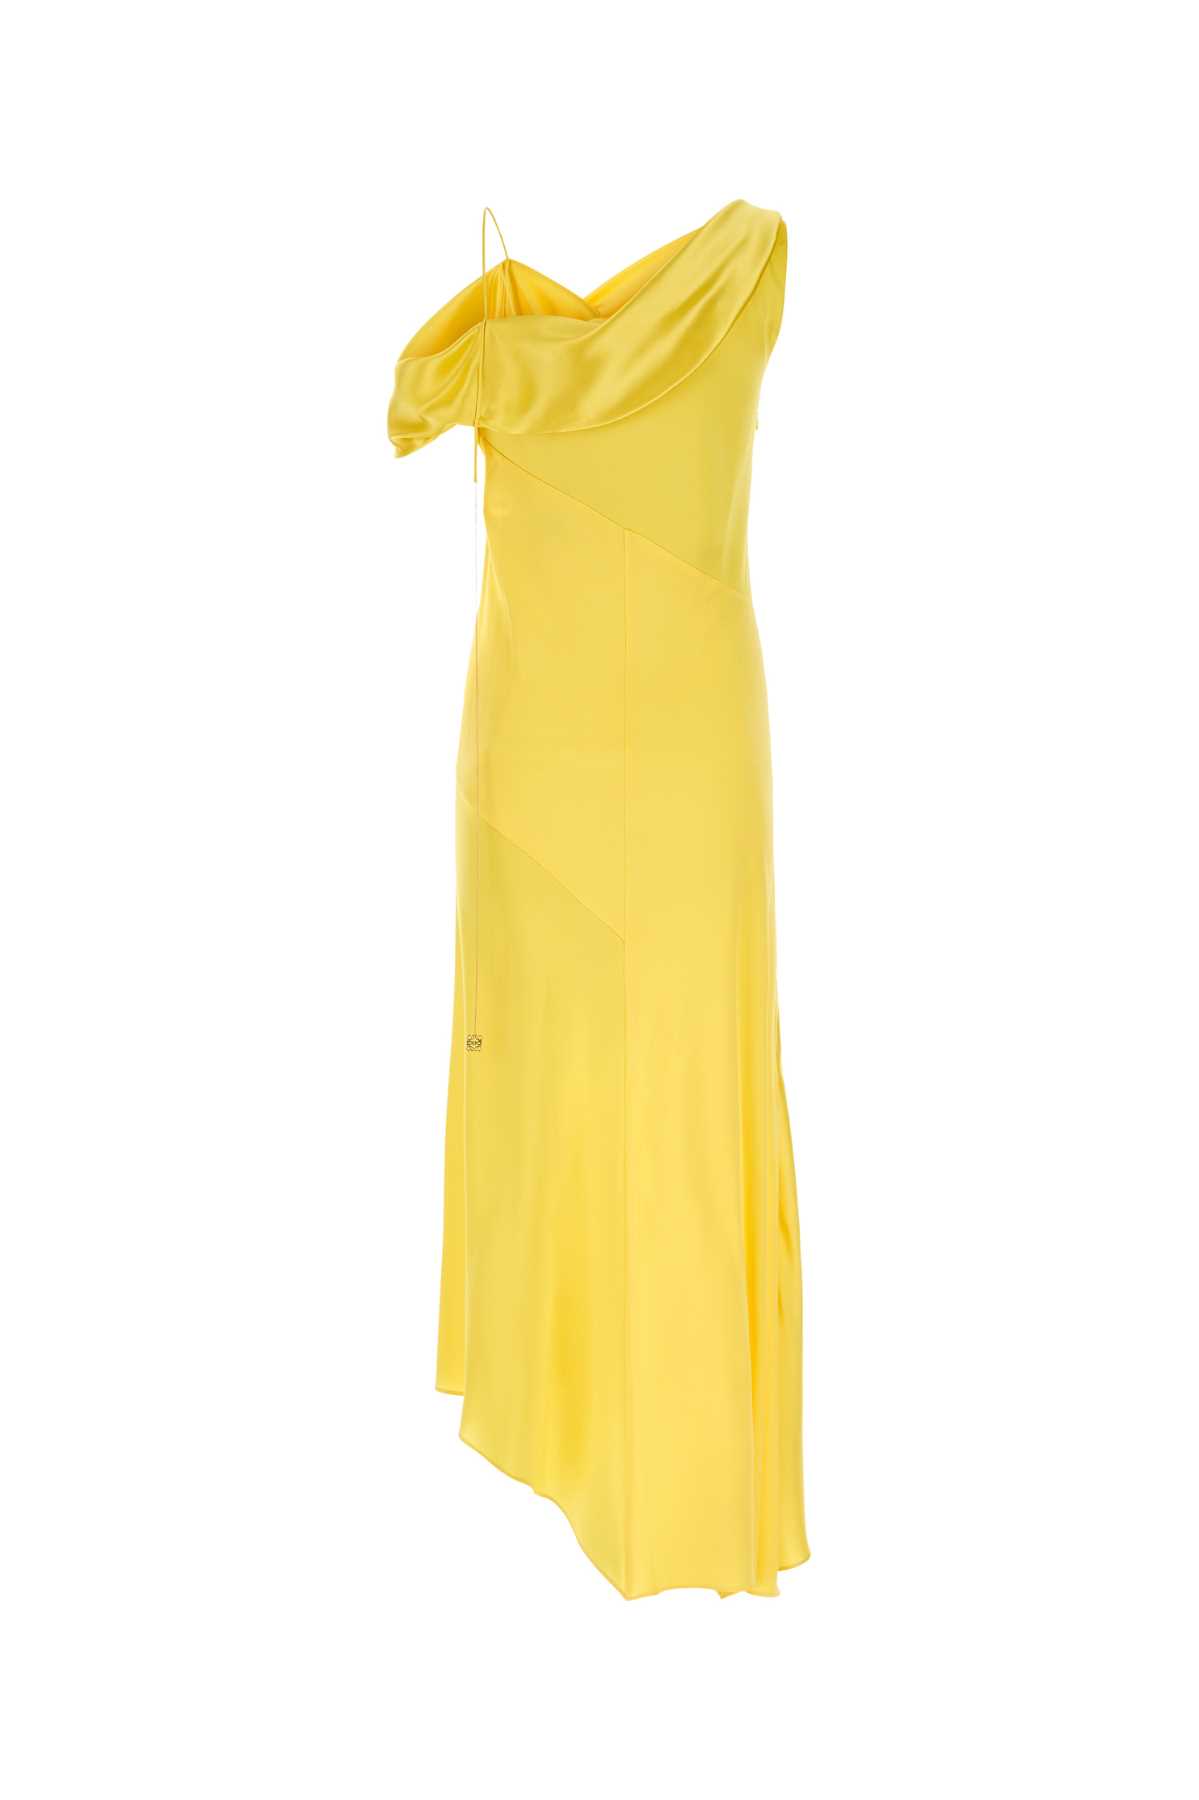 Loewe Yellow Satin Dress